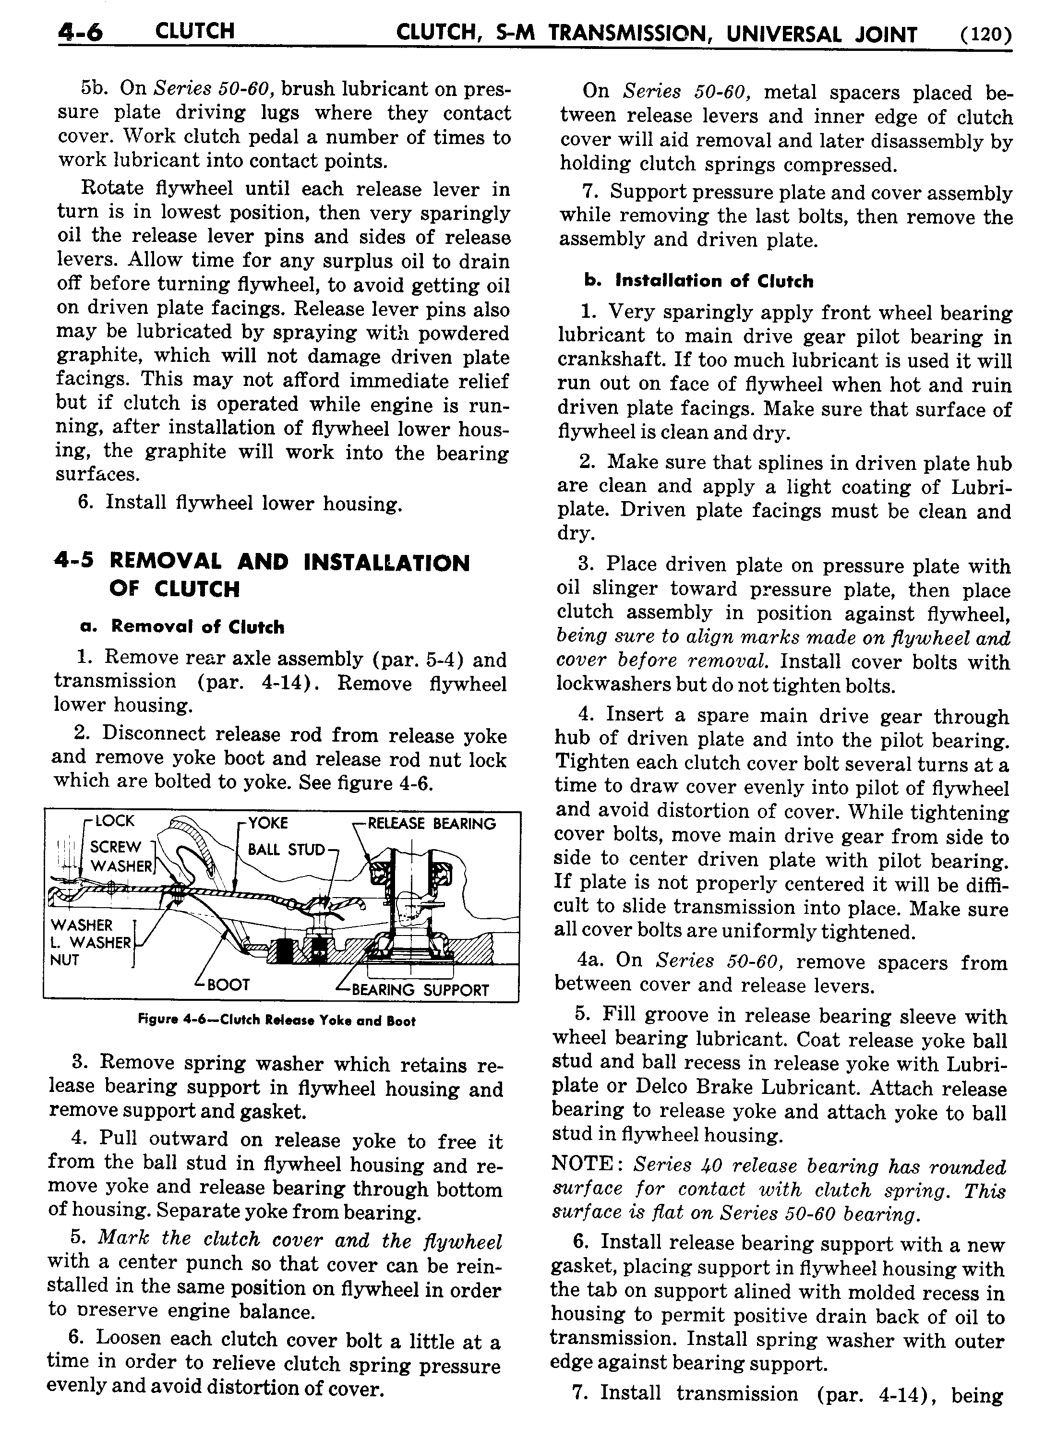 n_05 1955 Buick Shop Manual - Clutch & Trans-006-006.jpg